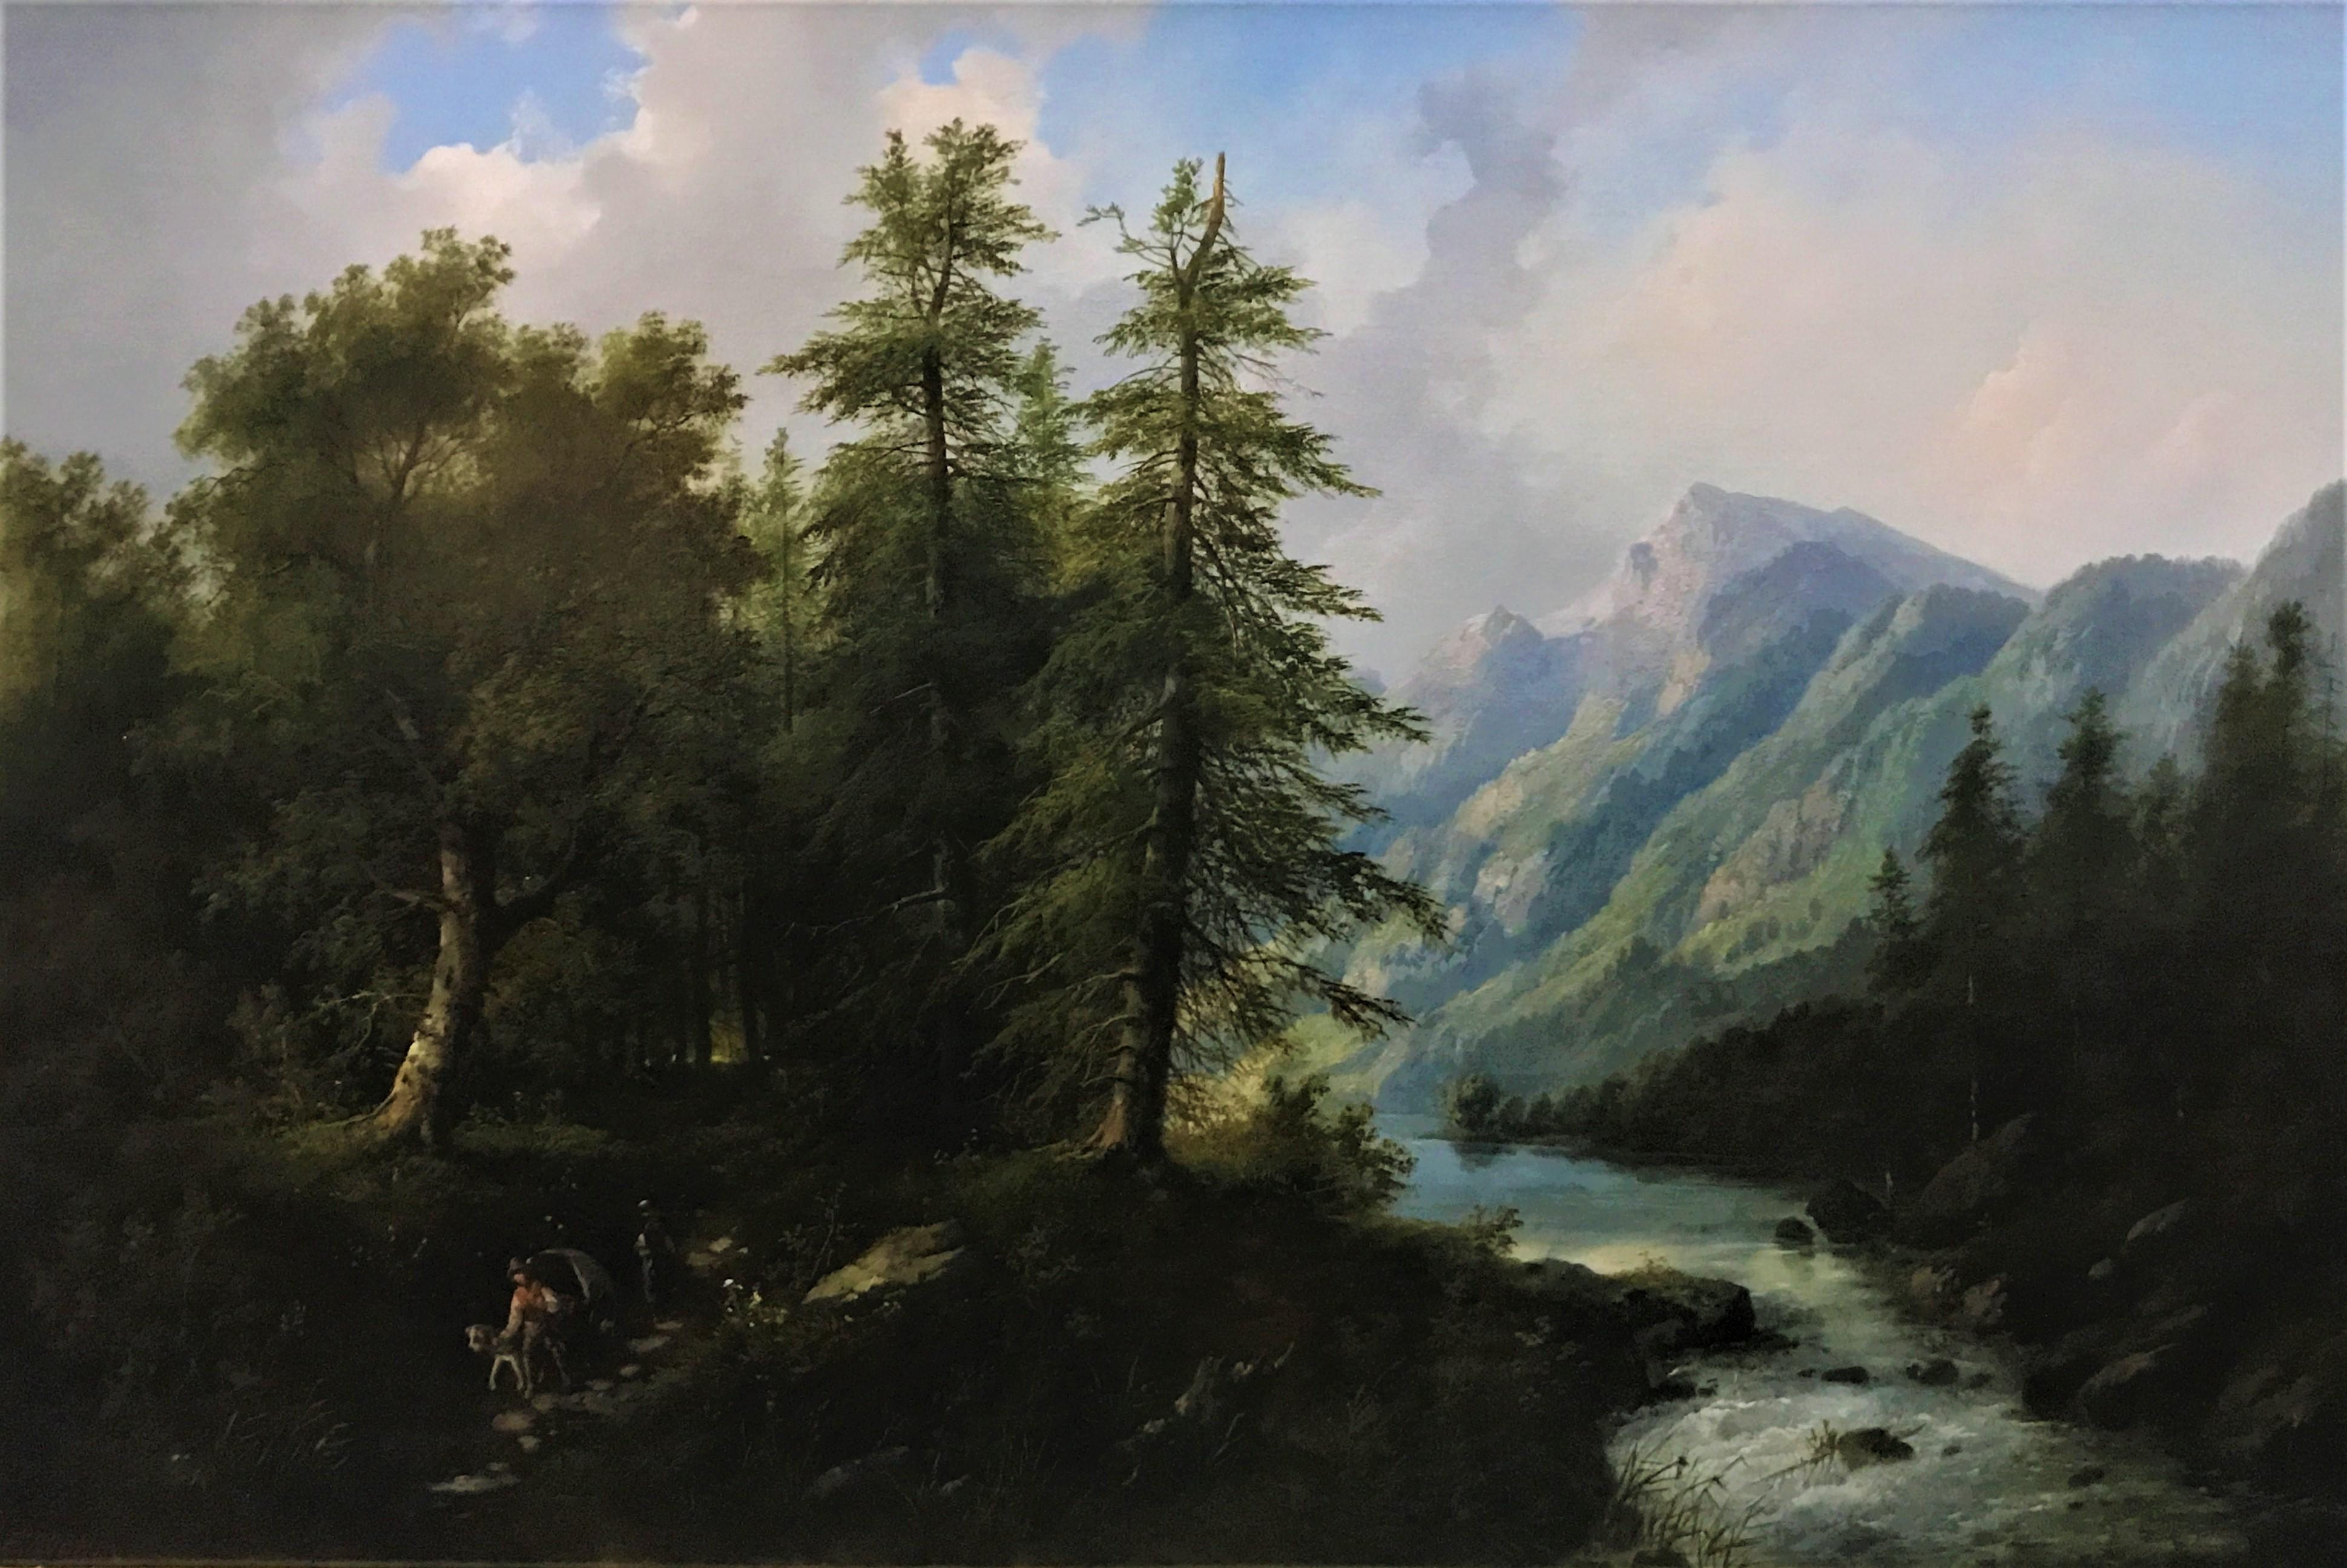 Mountains landscape Laundresses Antique oil painting Instant poster jpg \u0421harming landscape Instant poster jpeg 19-th century art